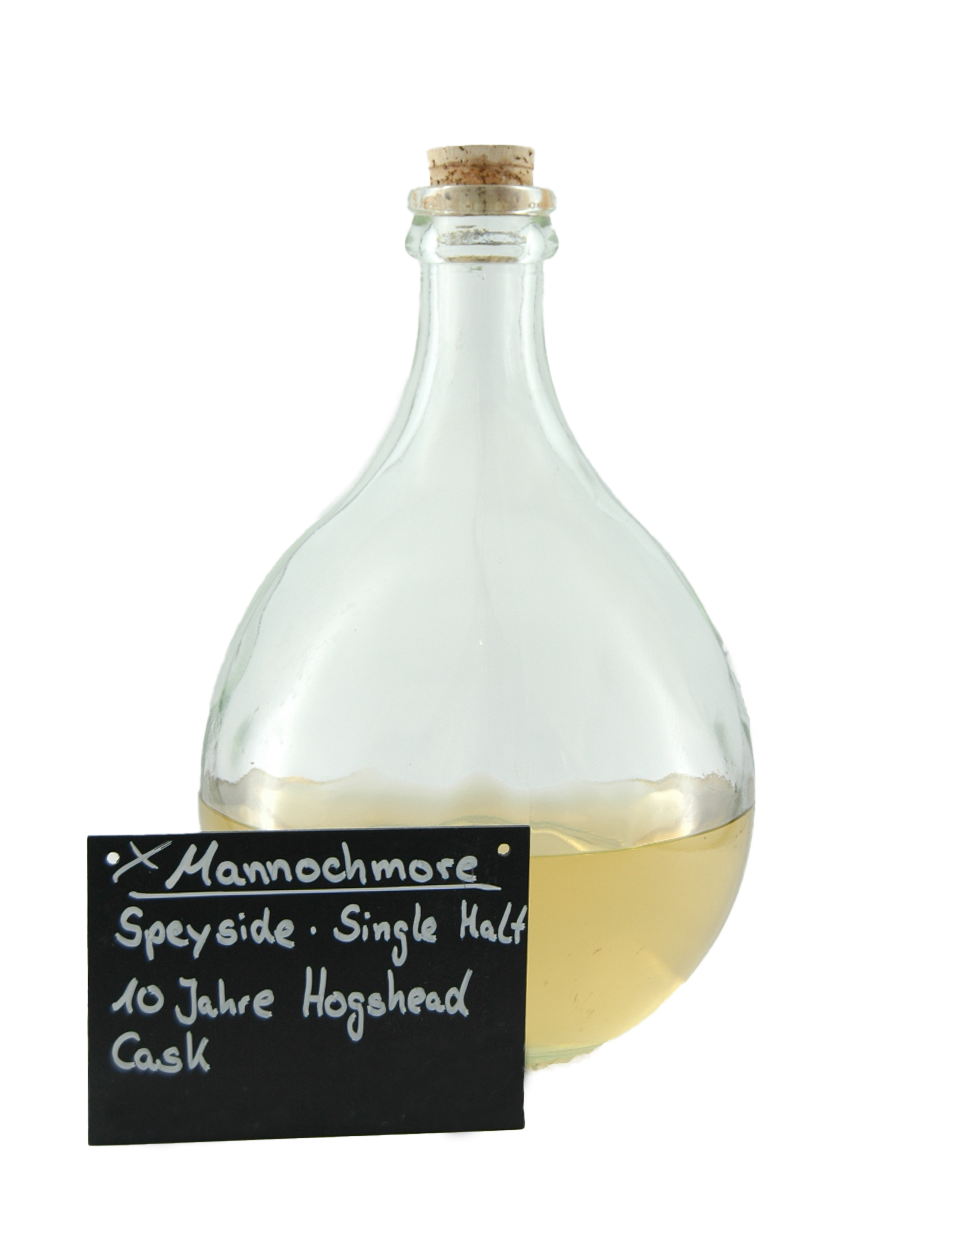 Mannochmore 10 Jahre Hogshead Cask - Single Malt Scotch Whisky - 500ml